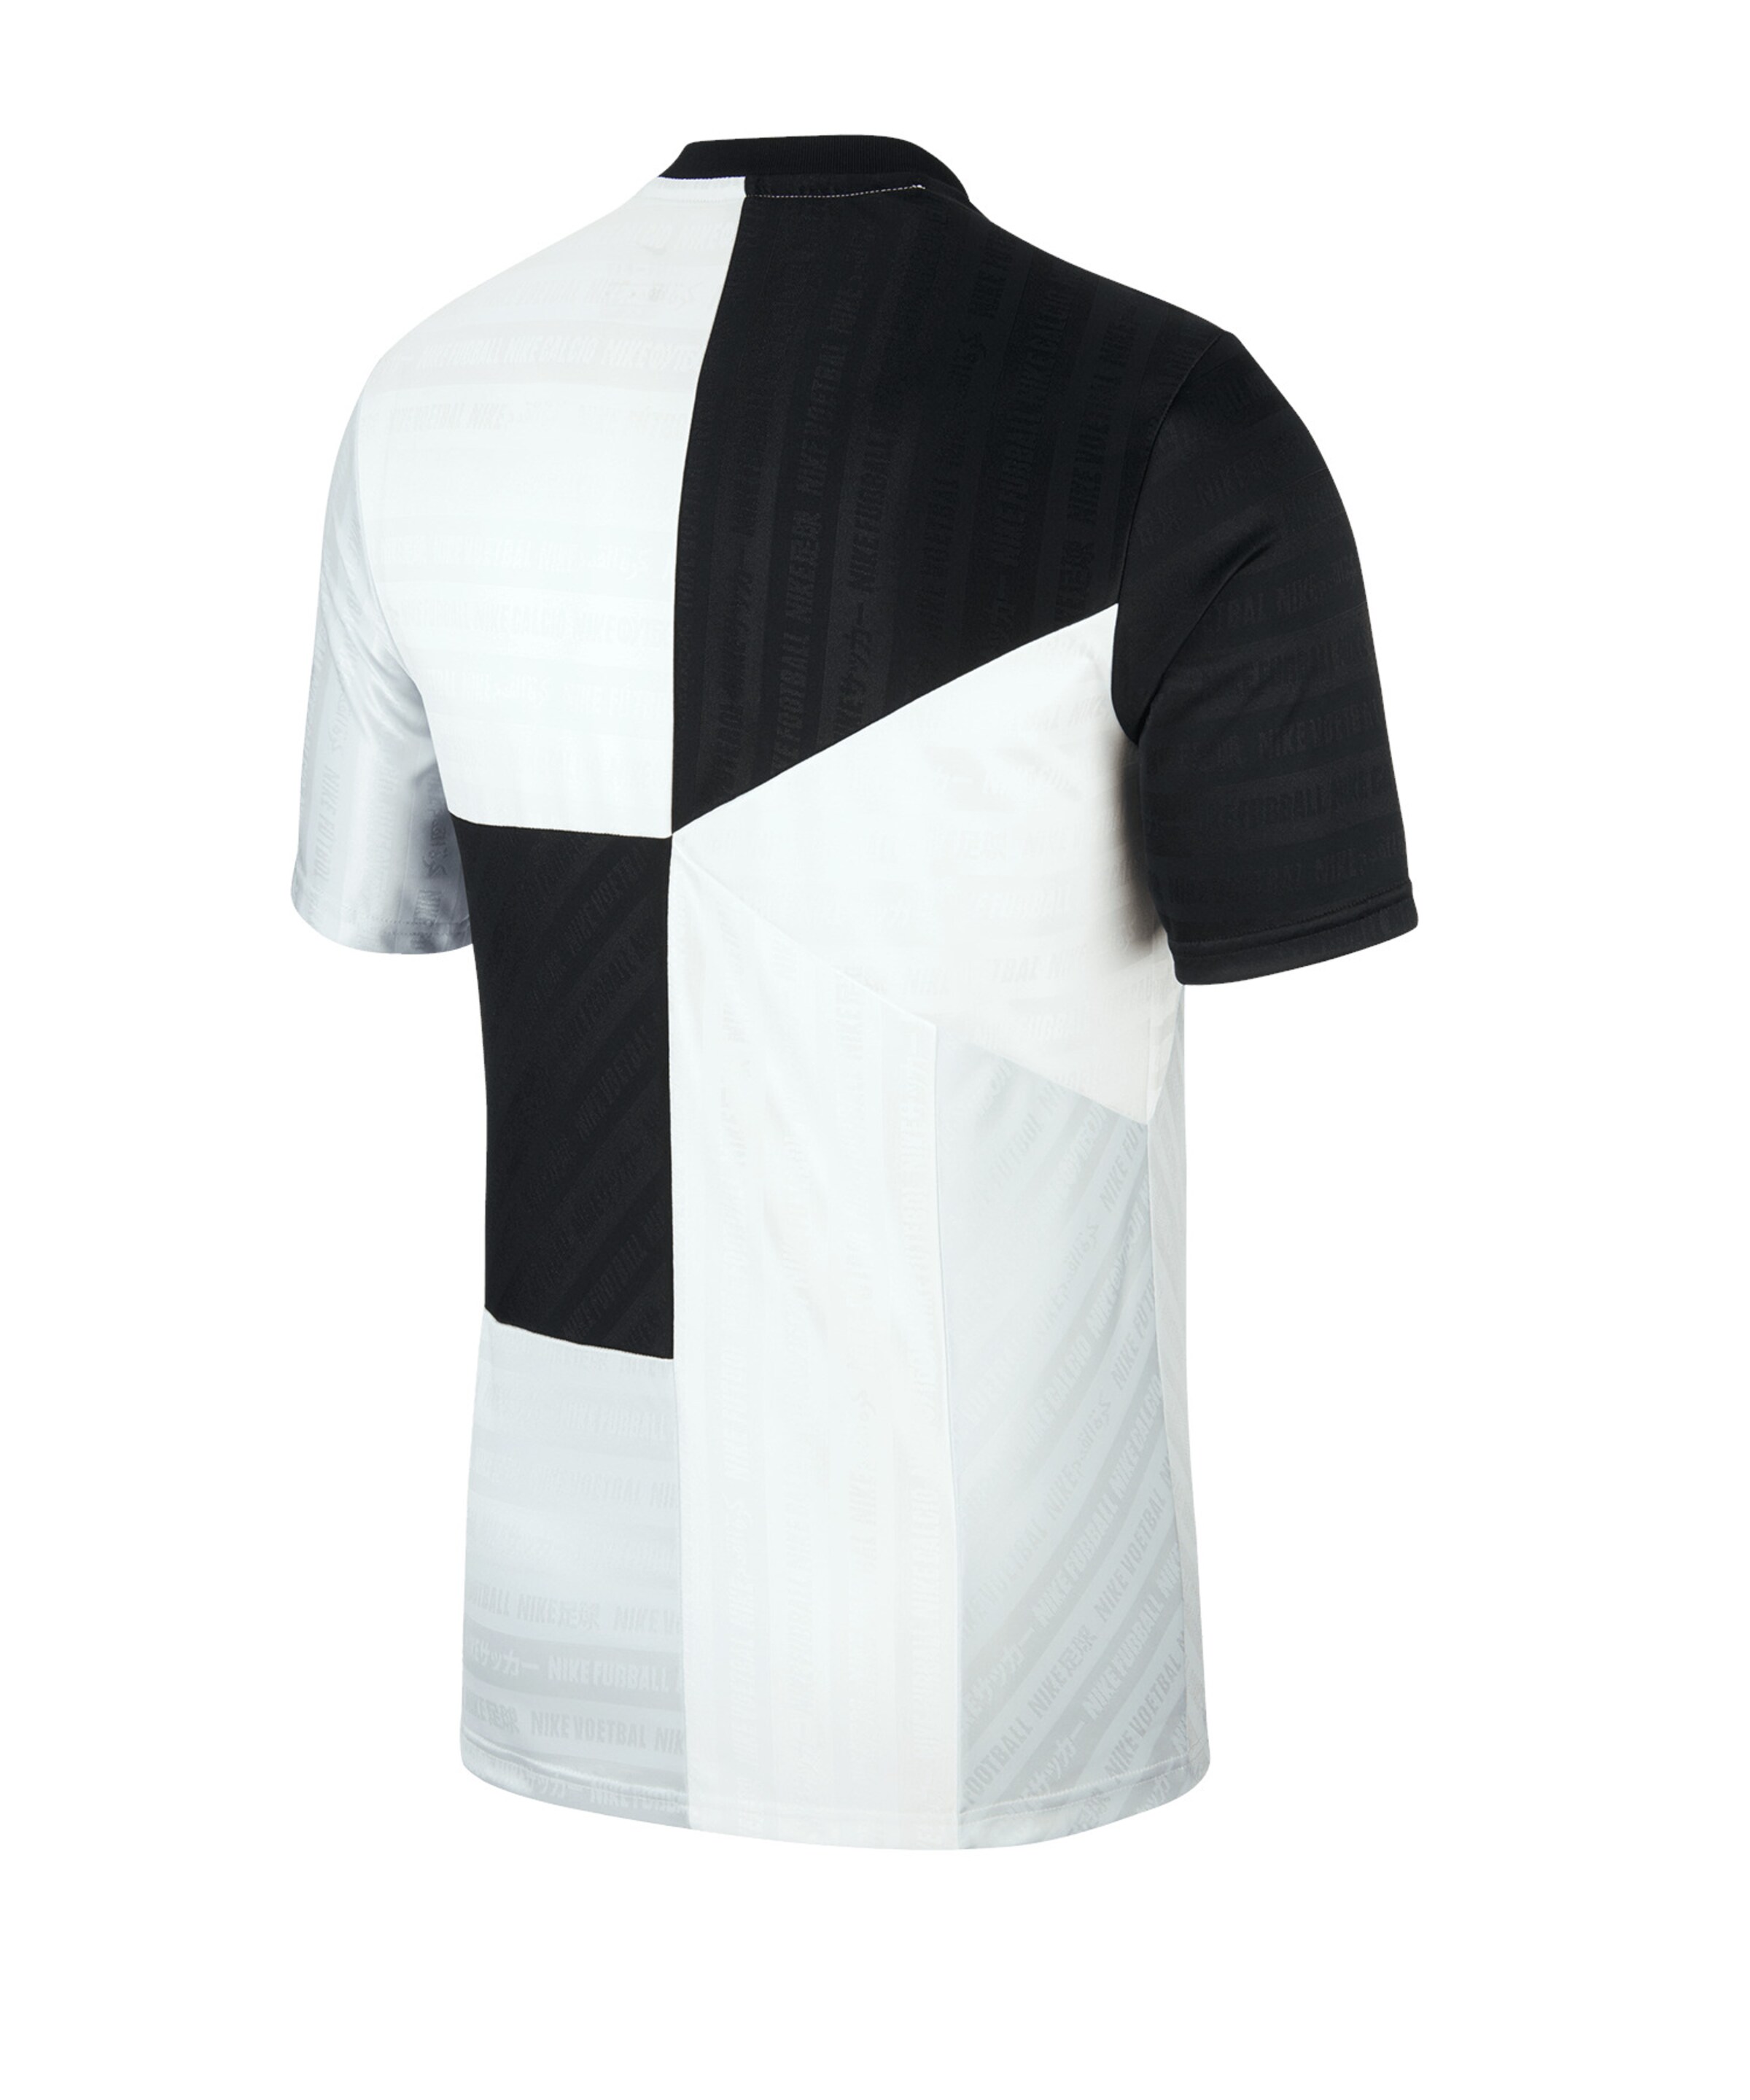 Männer Sportbekleidung NIKE T-Shirt in Schwarz, Weiß - IR15761